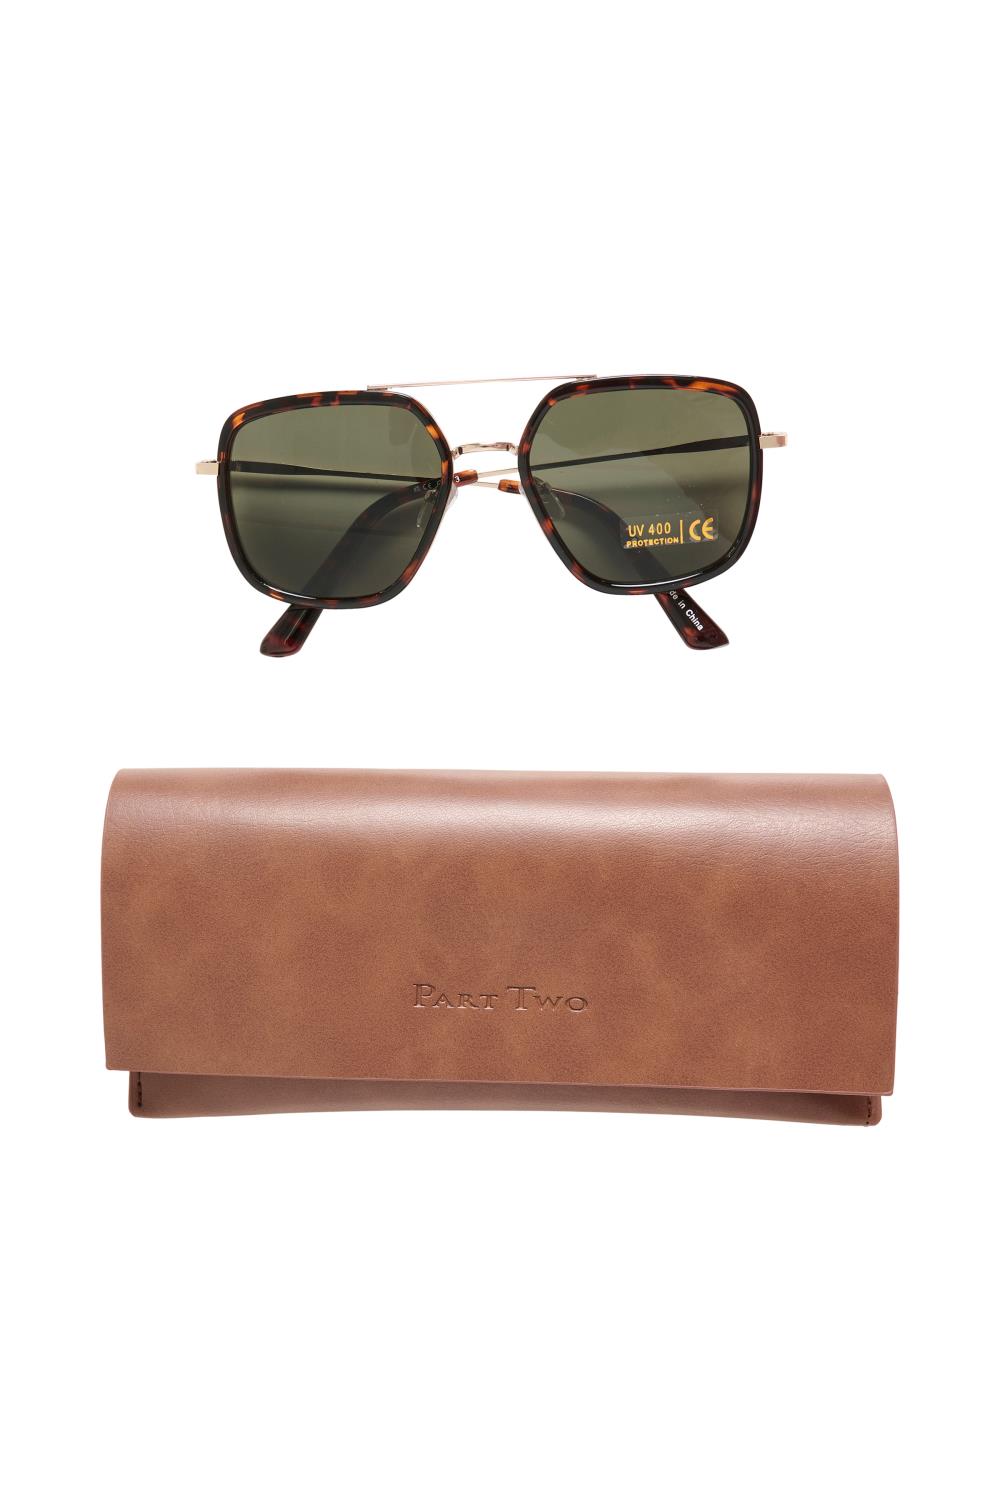 Part Two Noora Sunglasses, solbriller